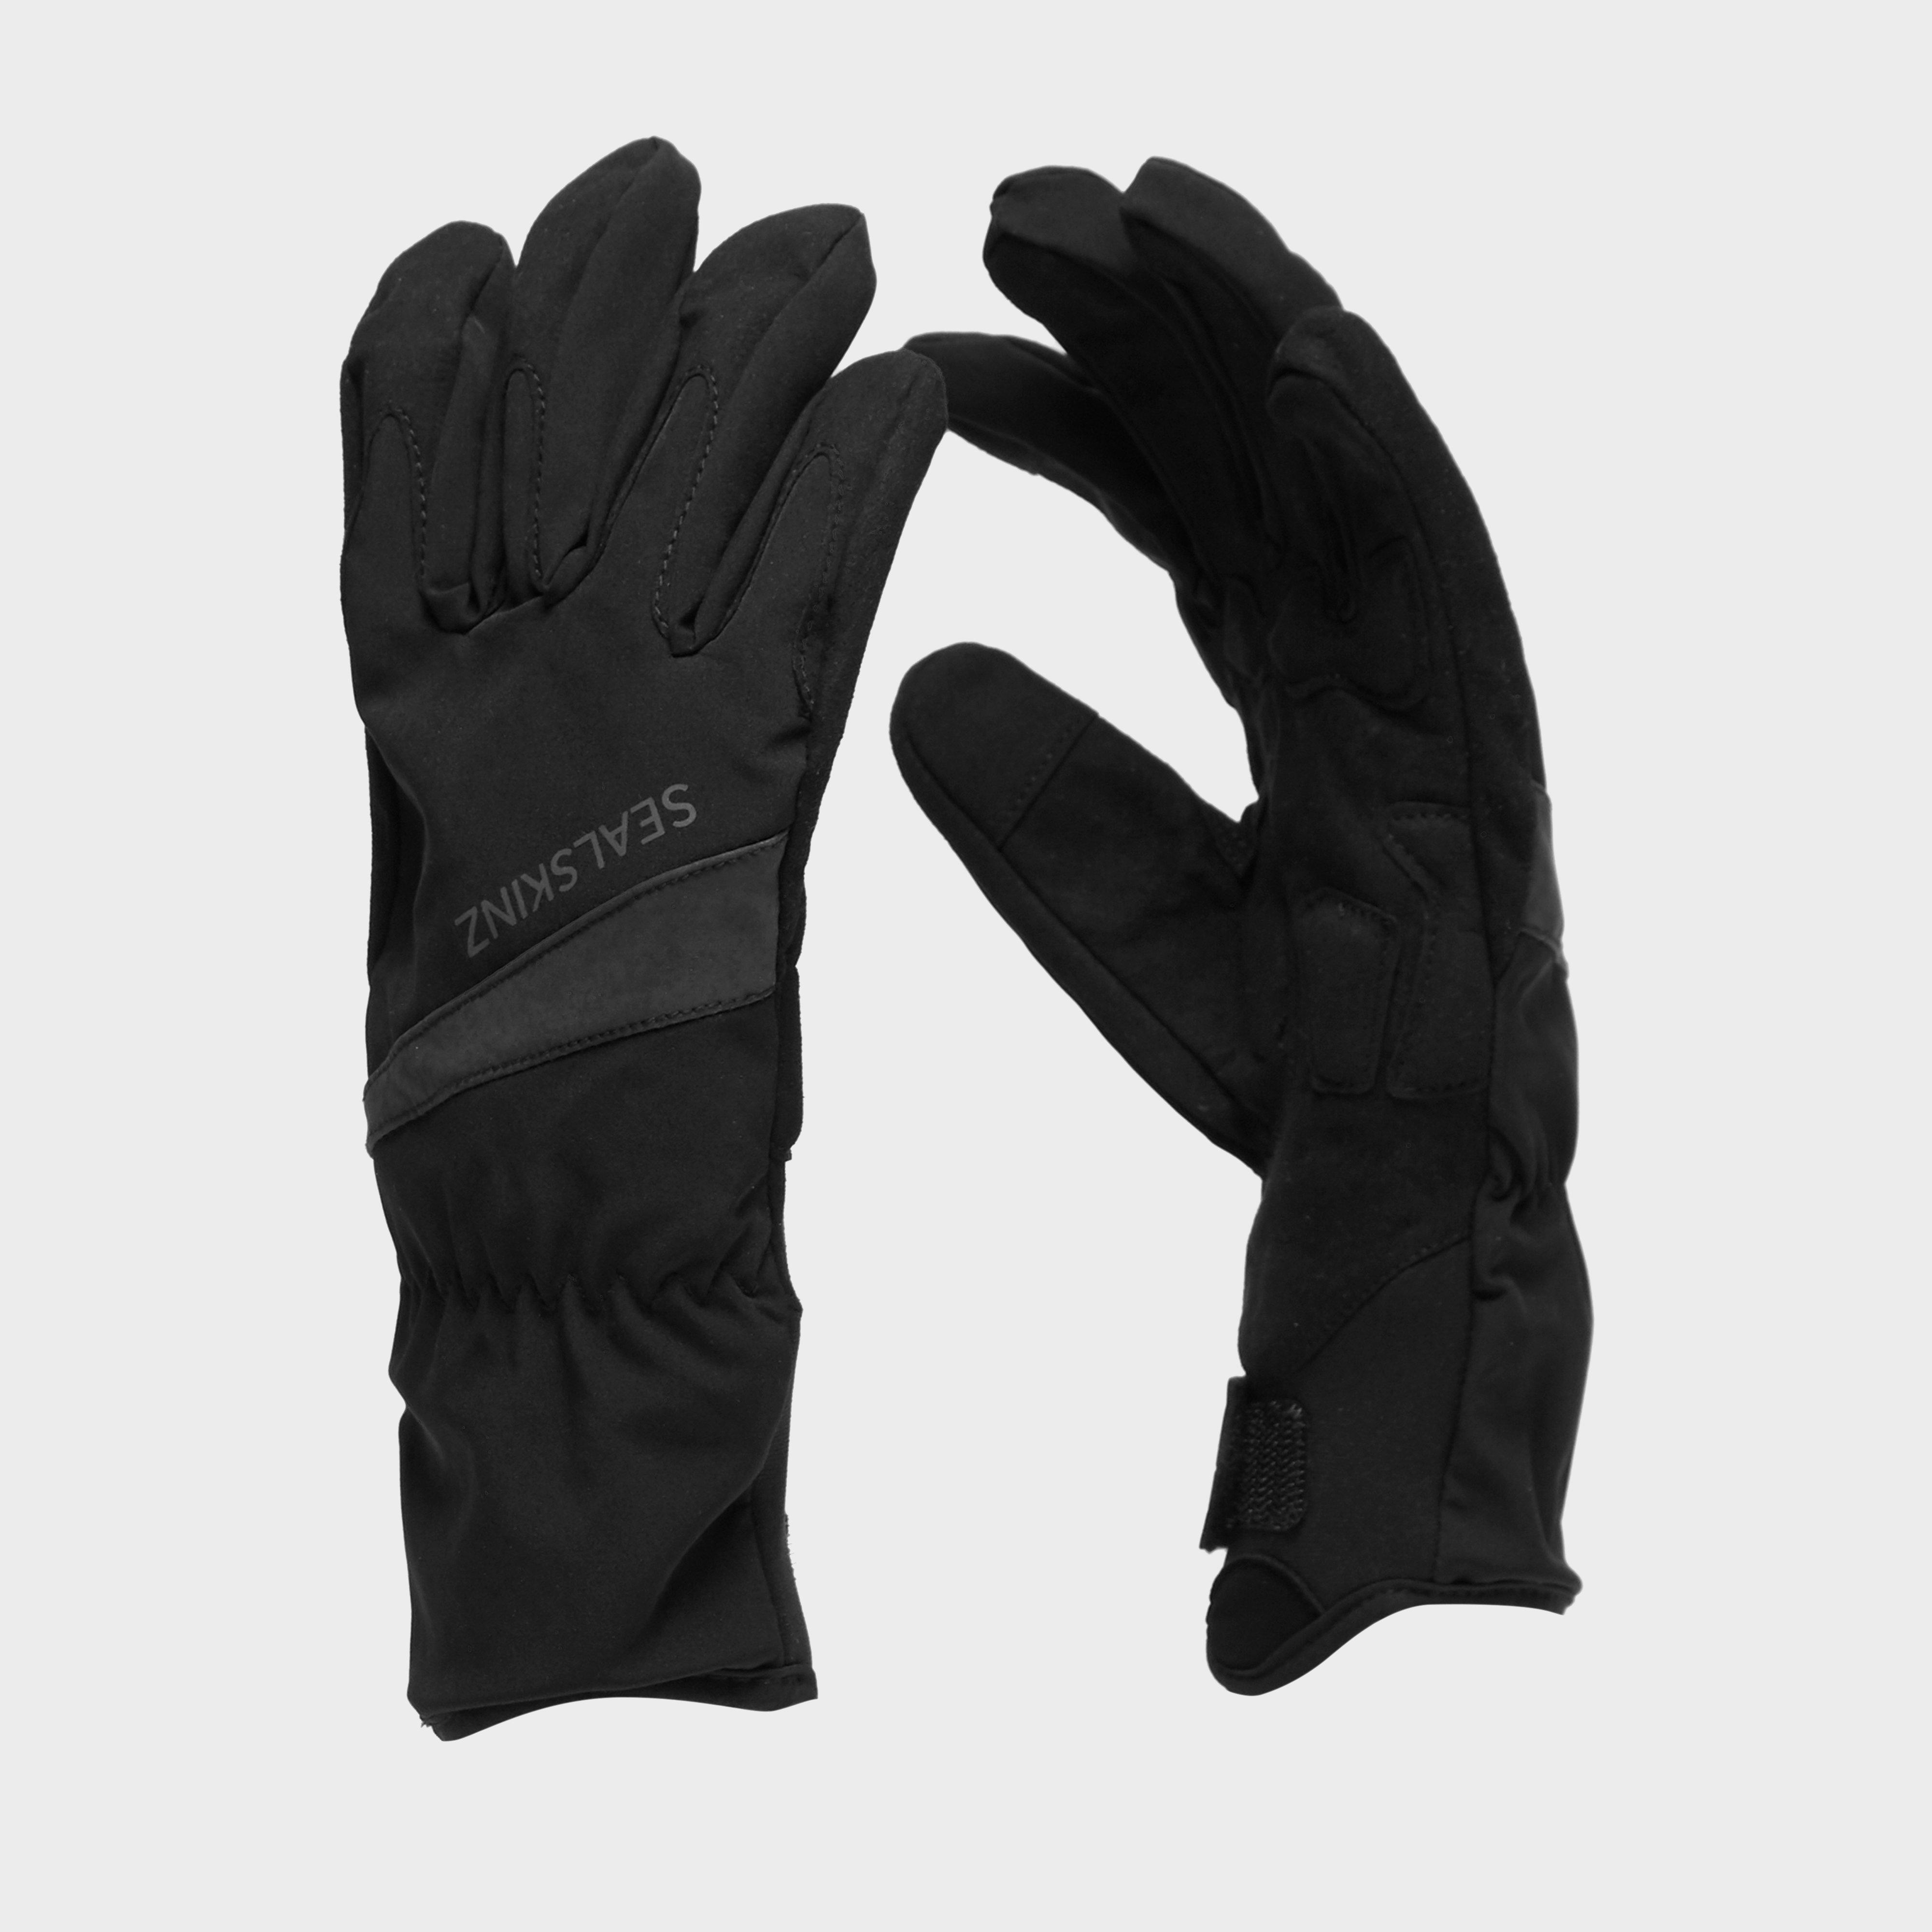 Sealskinz All Weather Cycle Gloves - Black/blk  Black/blk